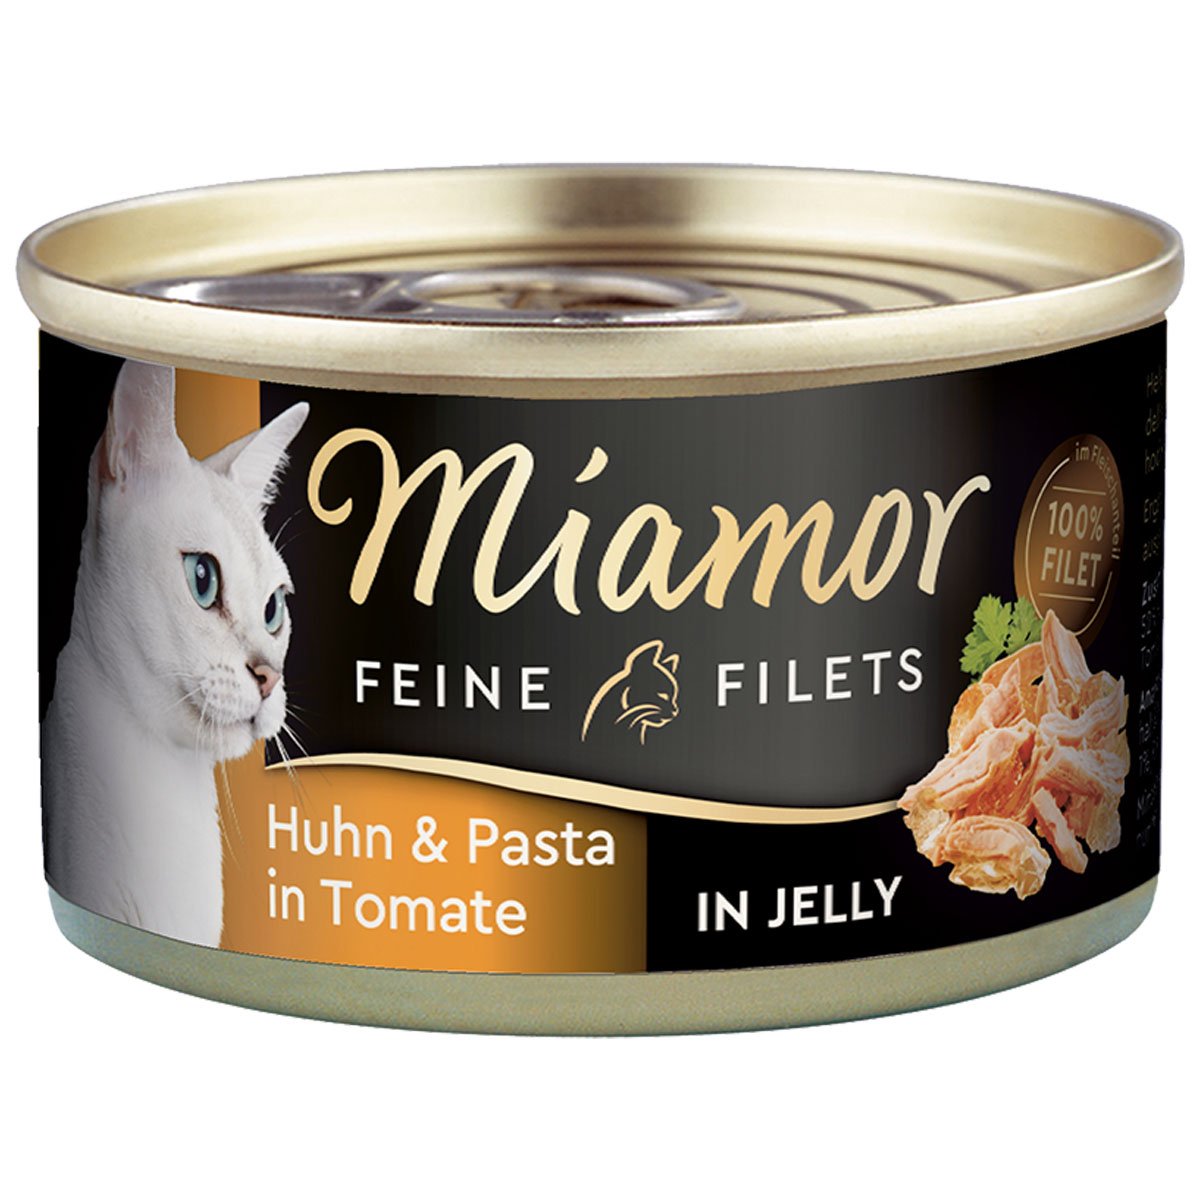 Miamor Feine Filets in Jelly Huhn und Pasta 100g Dose 24x100g von Miamor